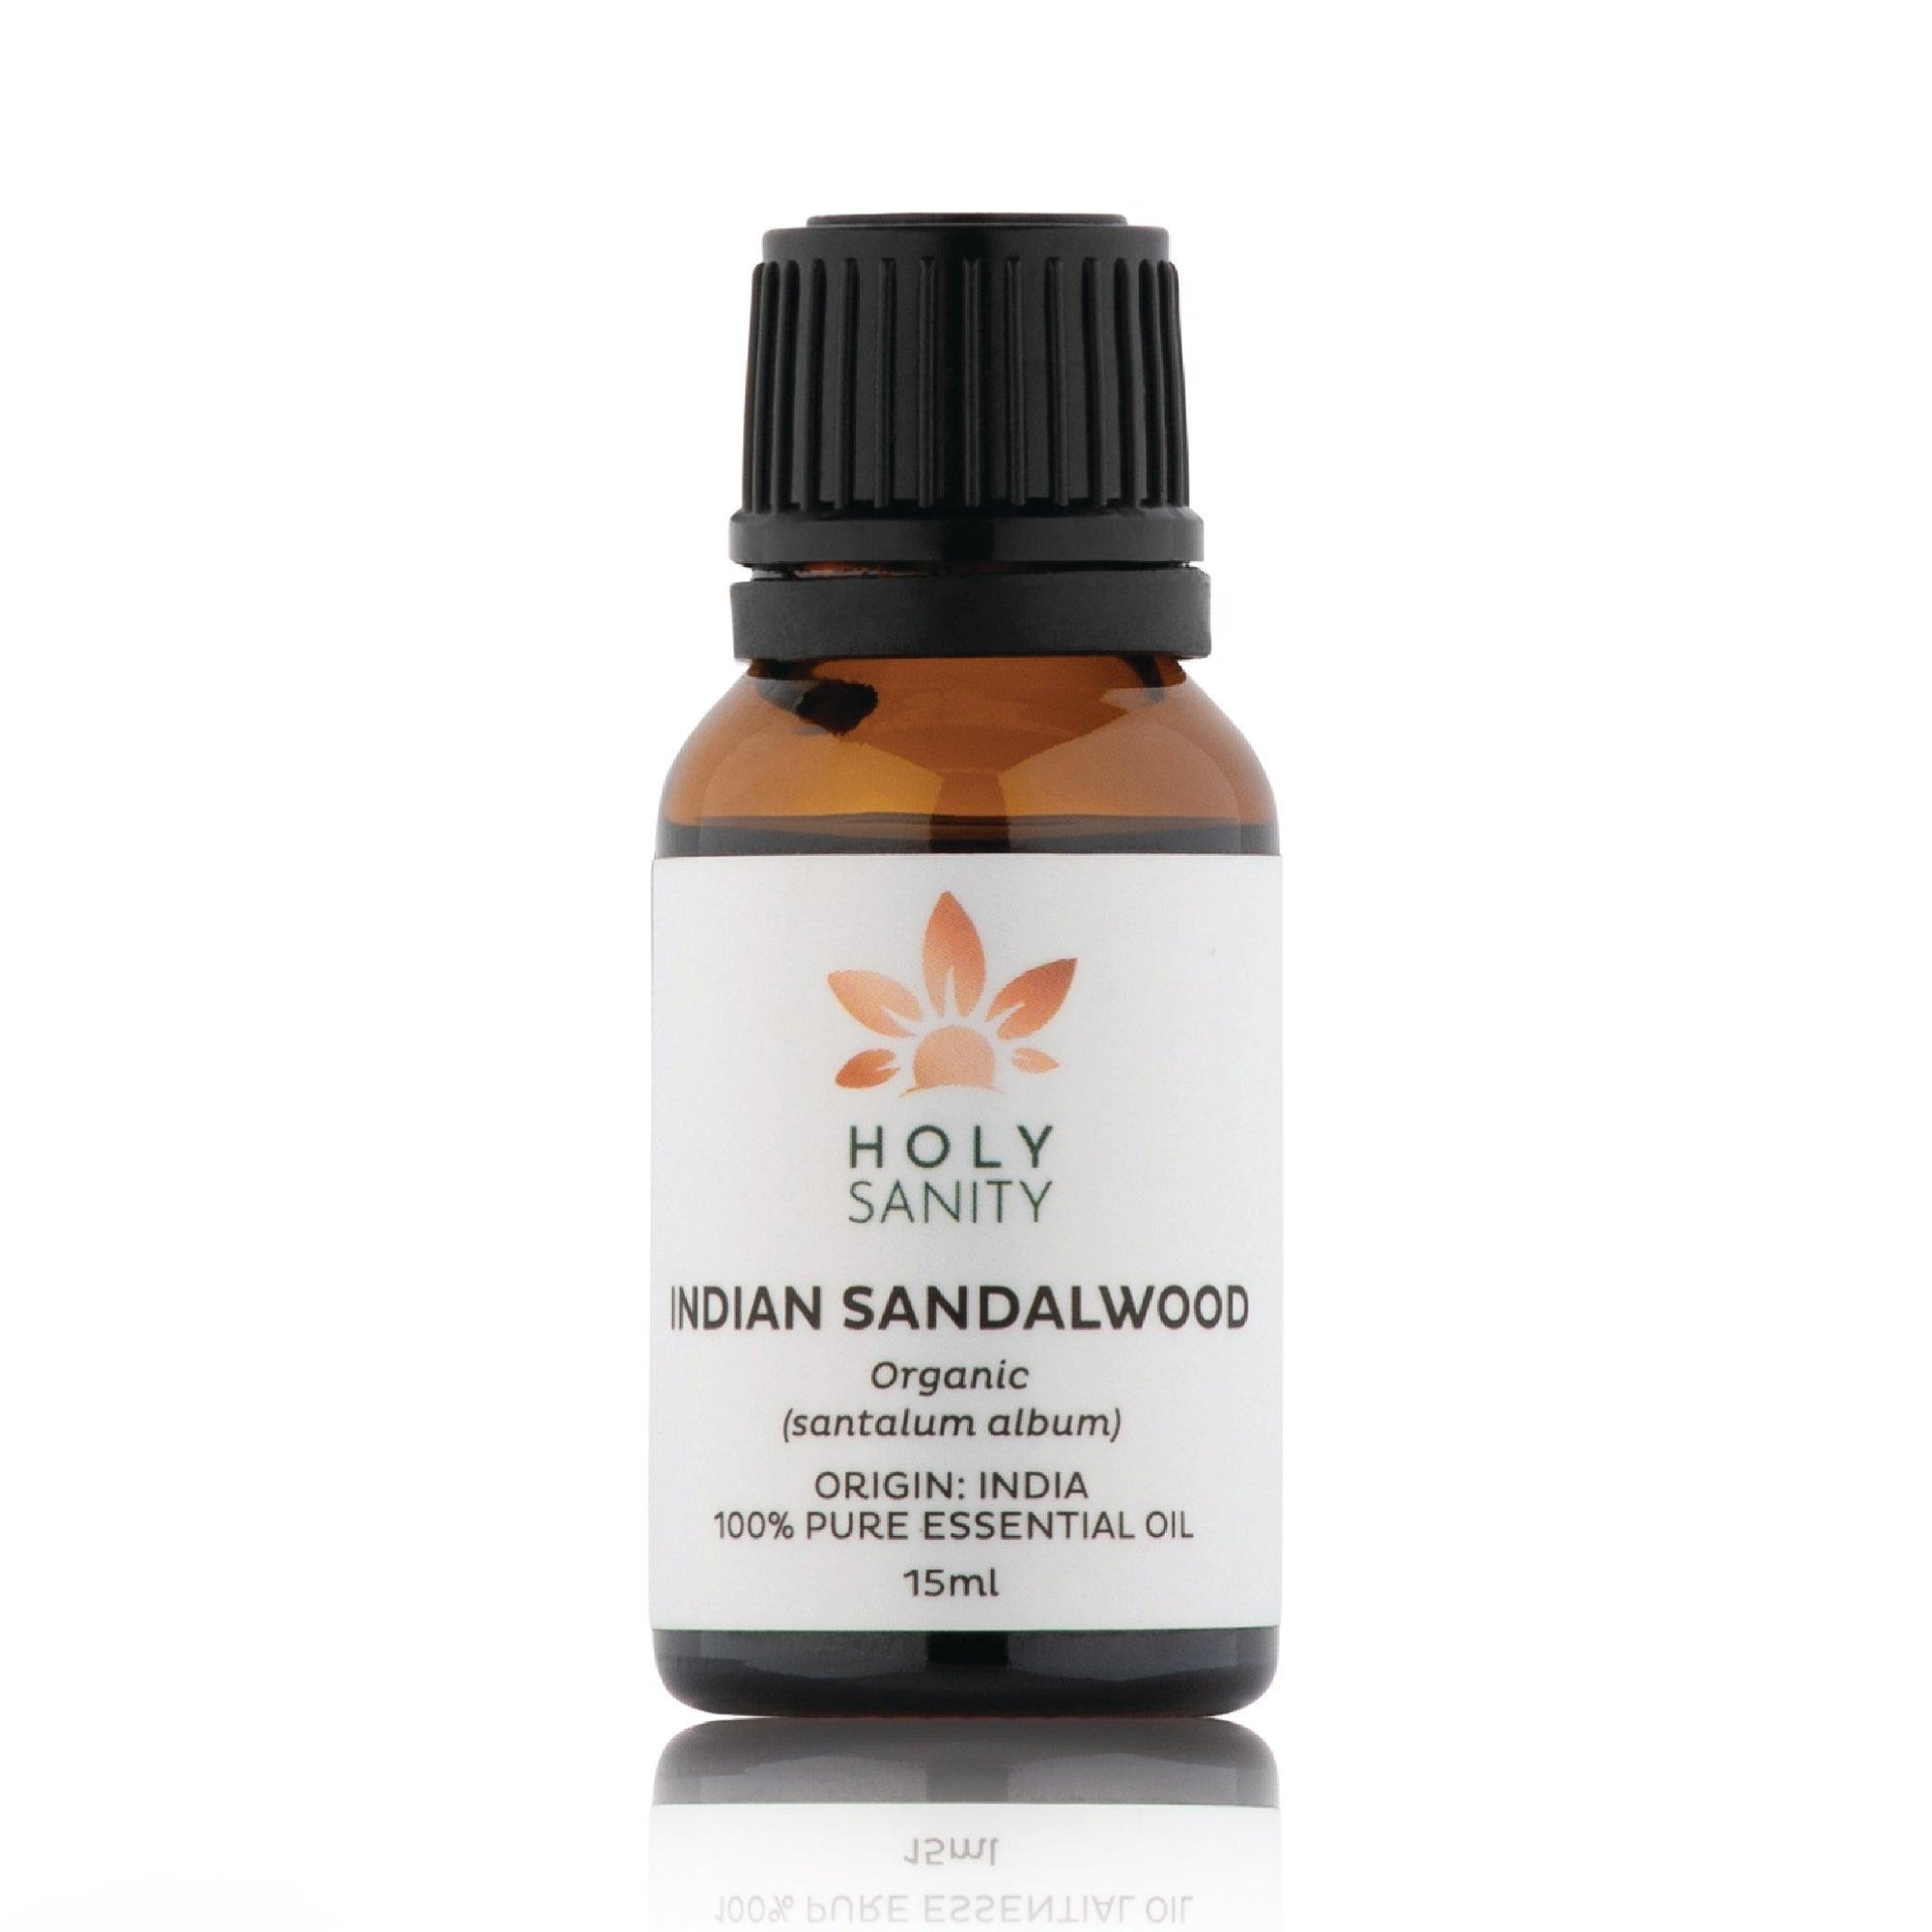 Organic Indian Sandalwood Essential Oil (15ml) - Holy Sanity 